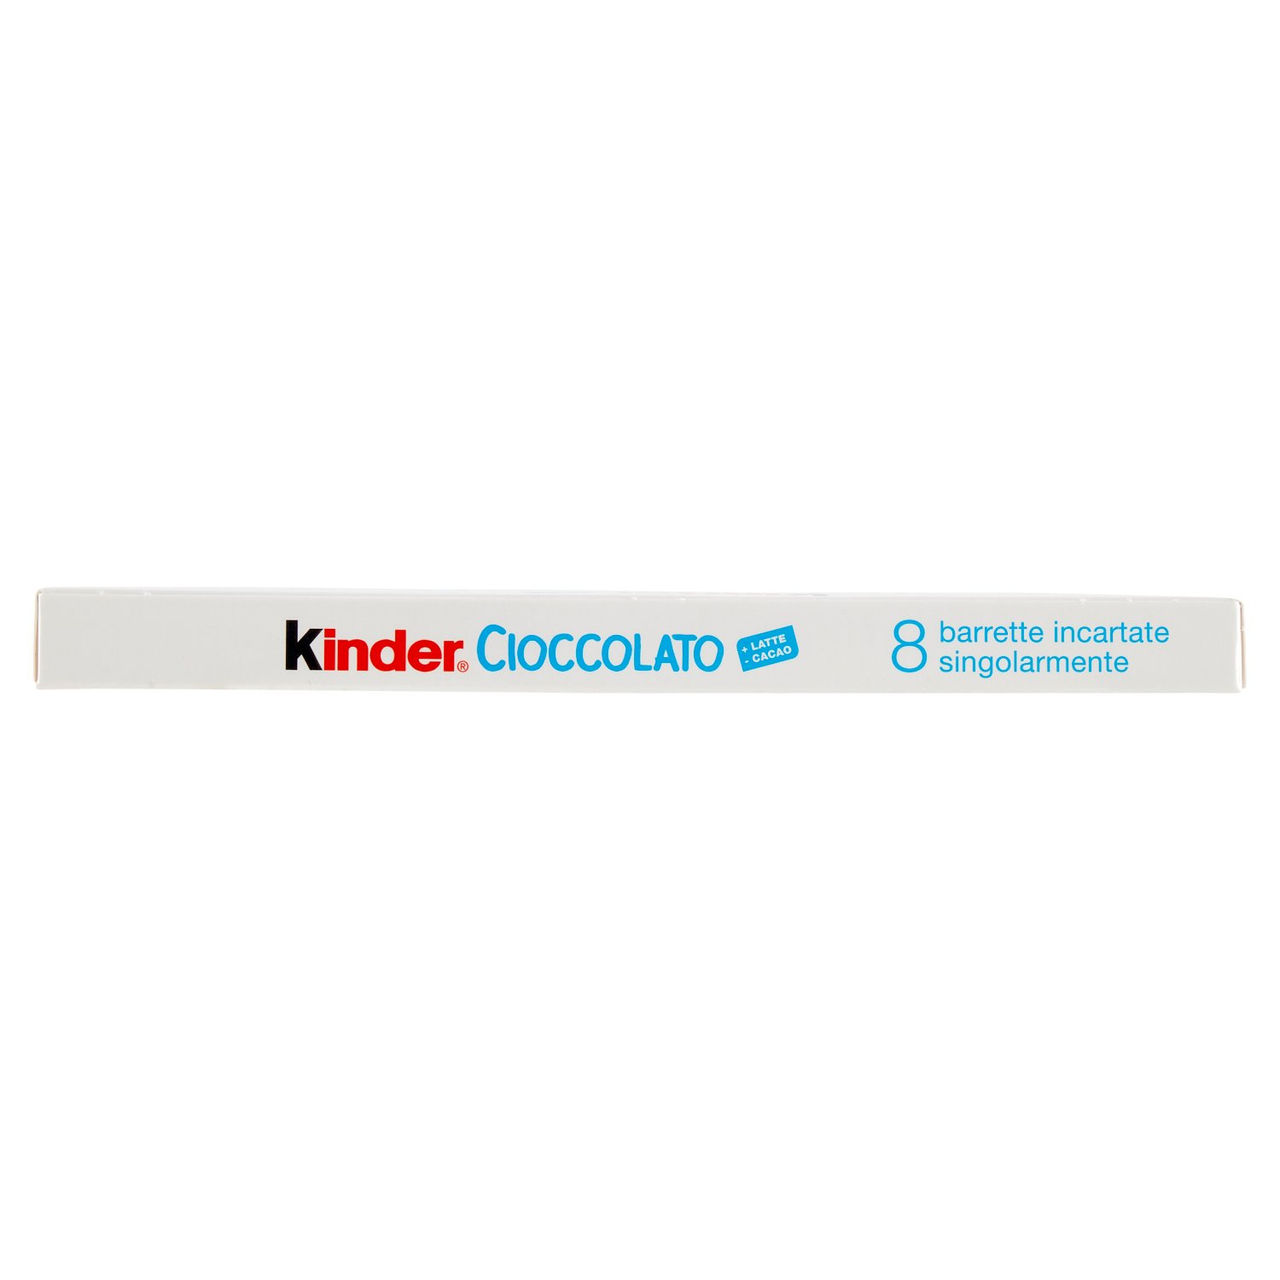 Kinder Cioccolato 8 x 12,5 g in vendita online